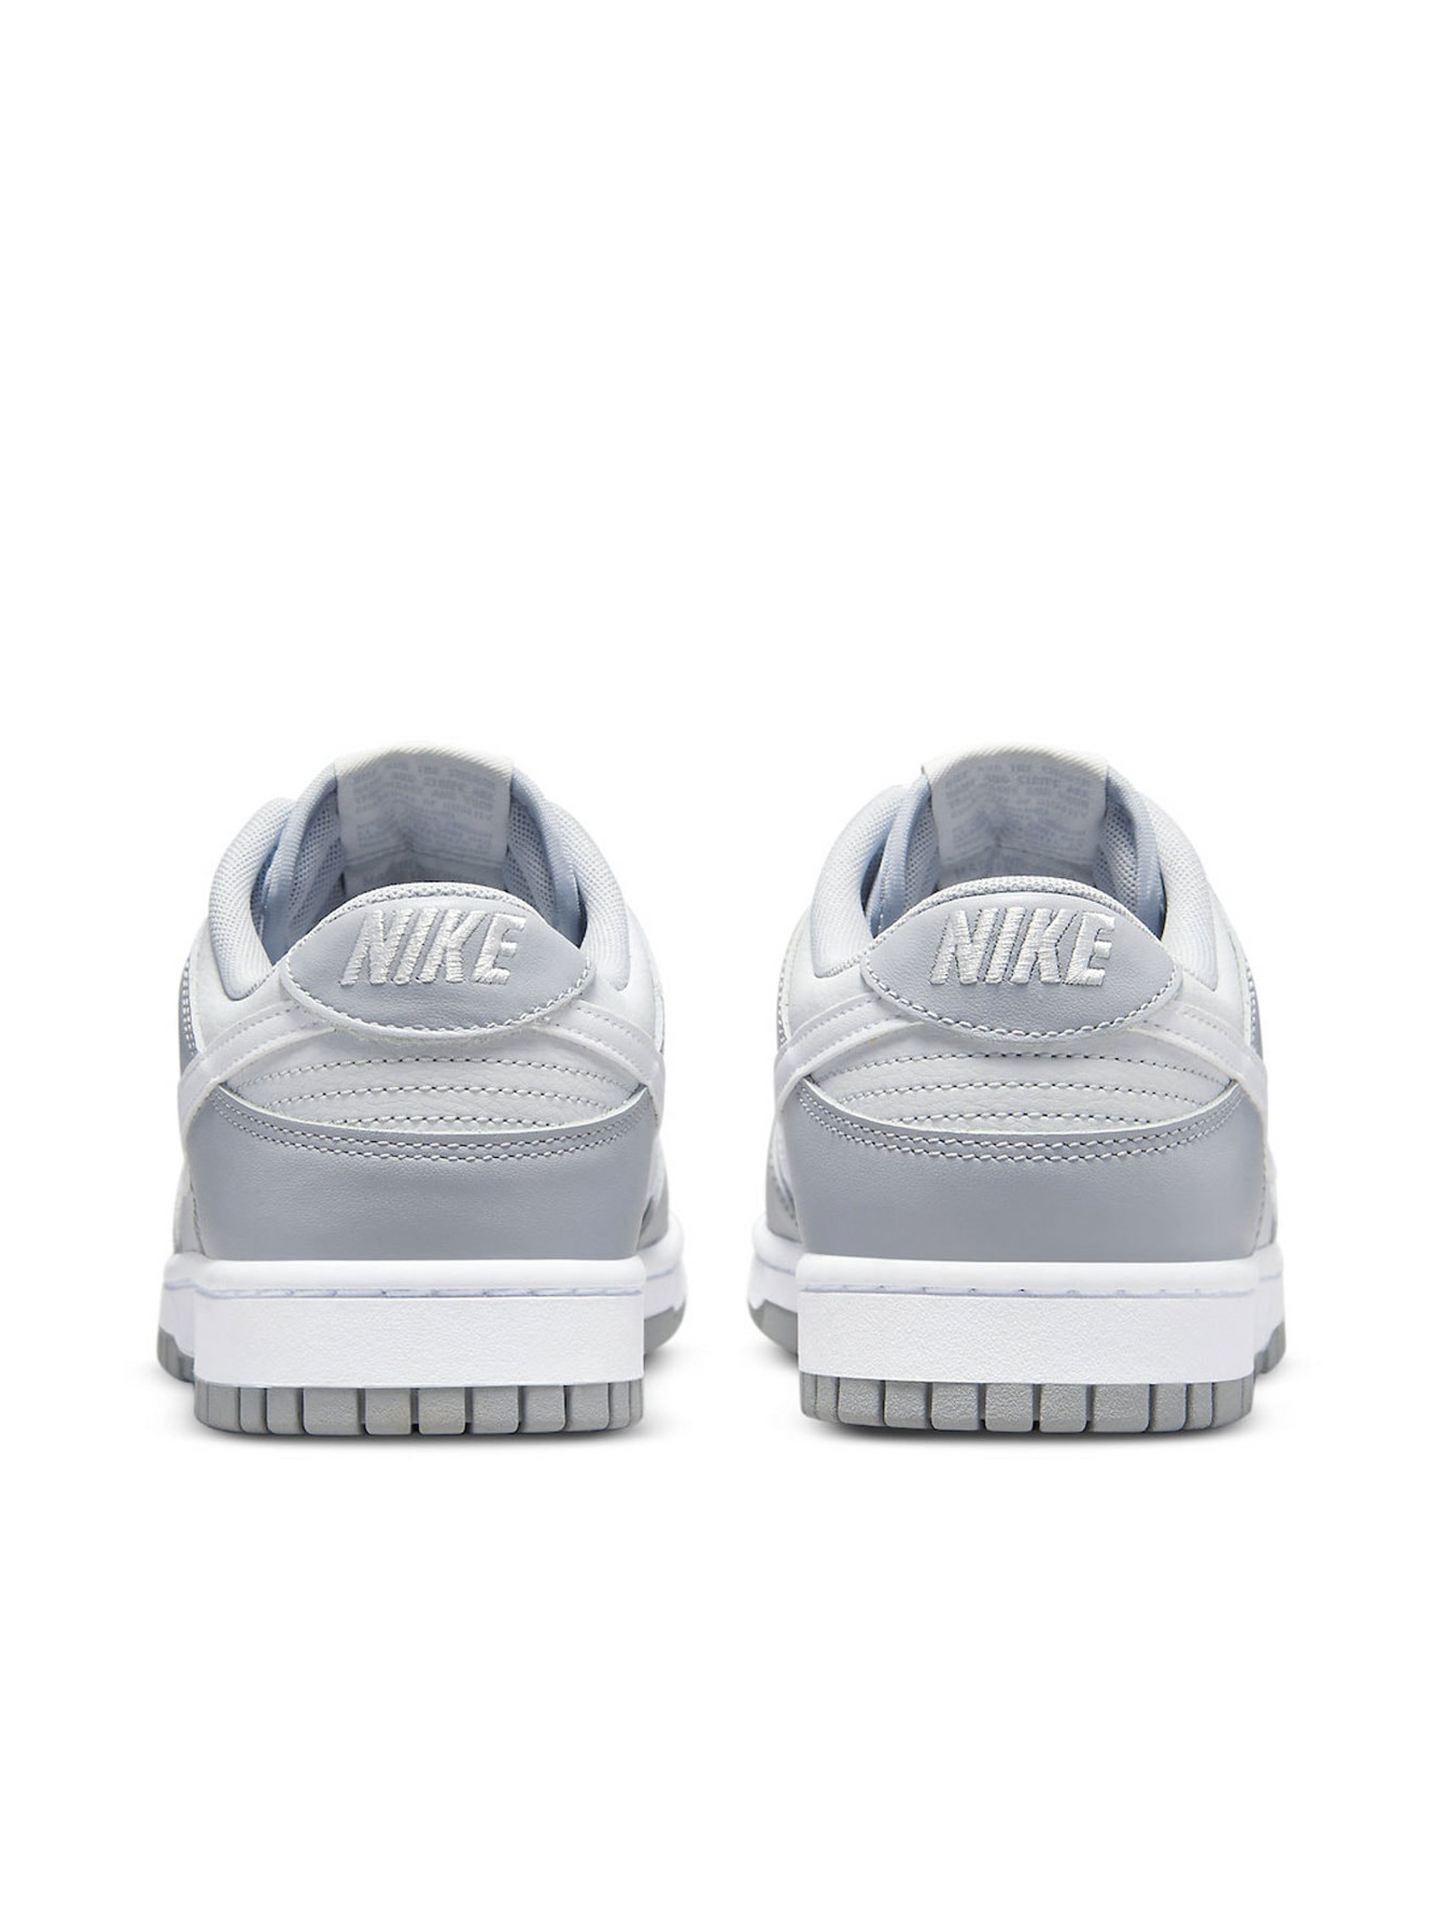 Nike Dunk Low Two Tone Grey  DJ6188-001